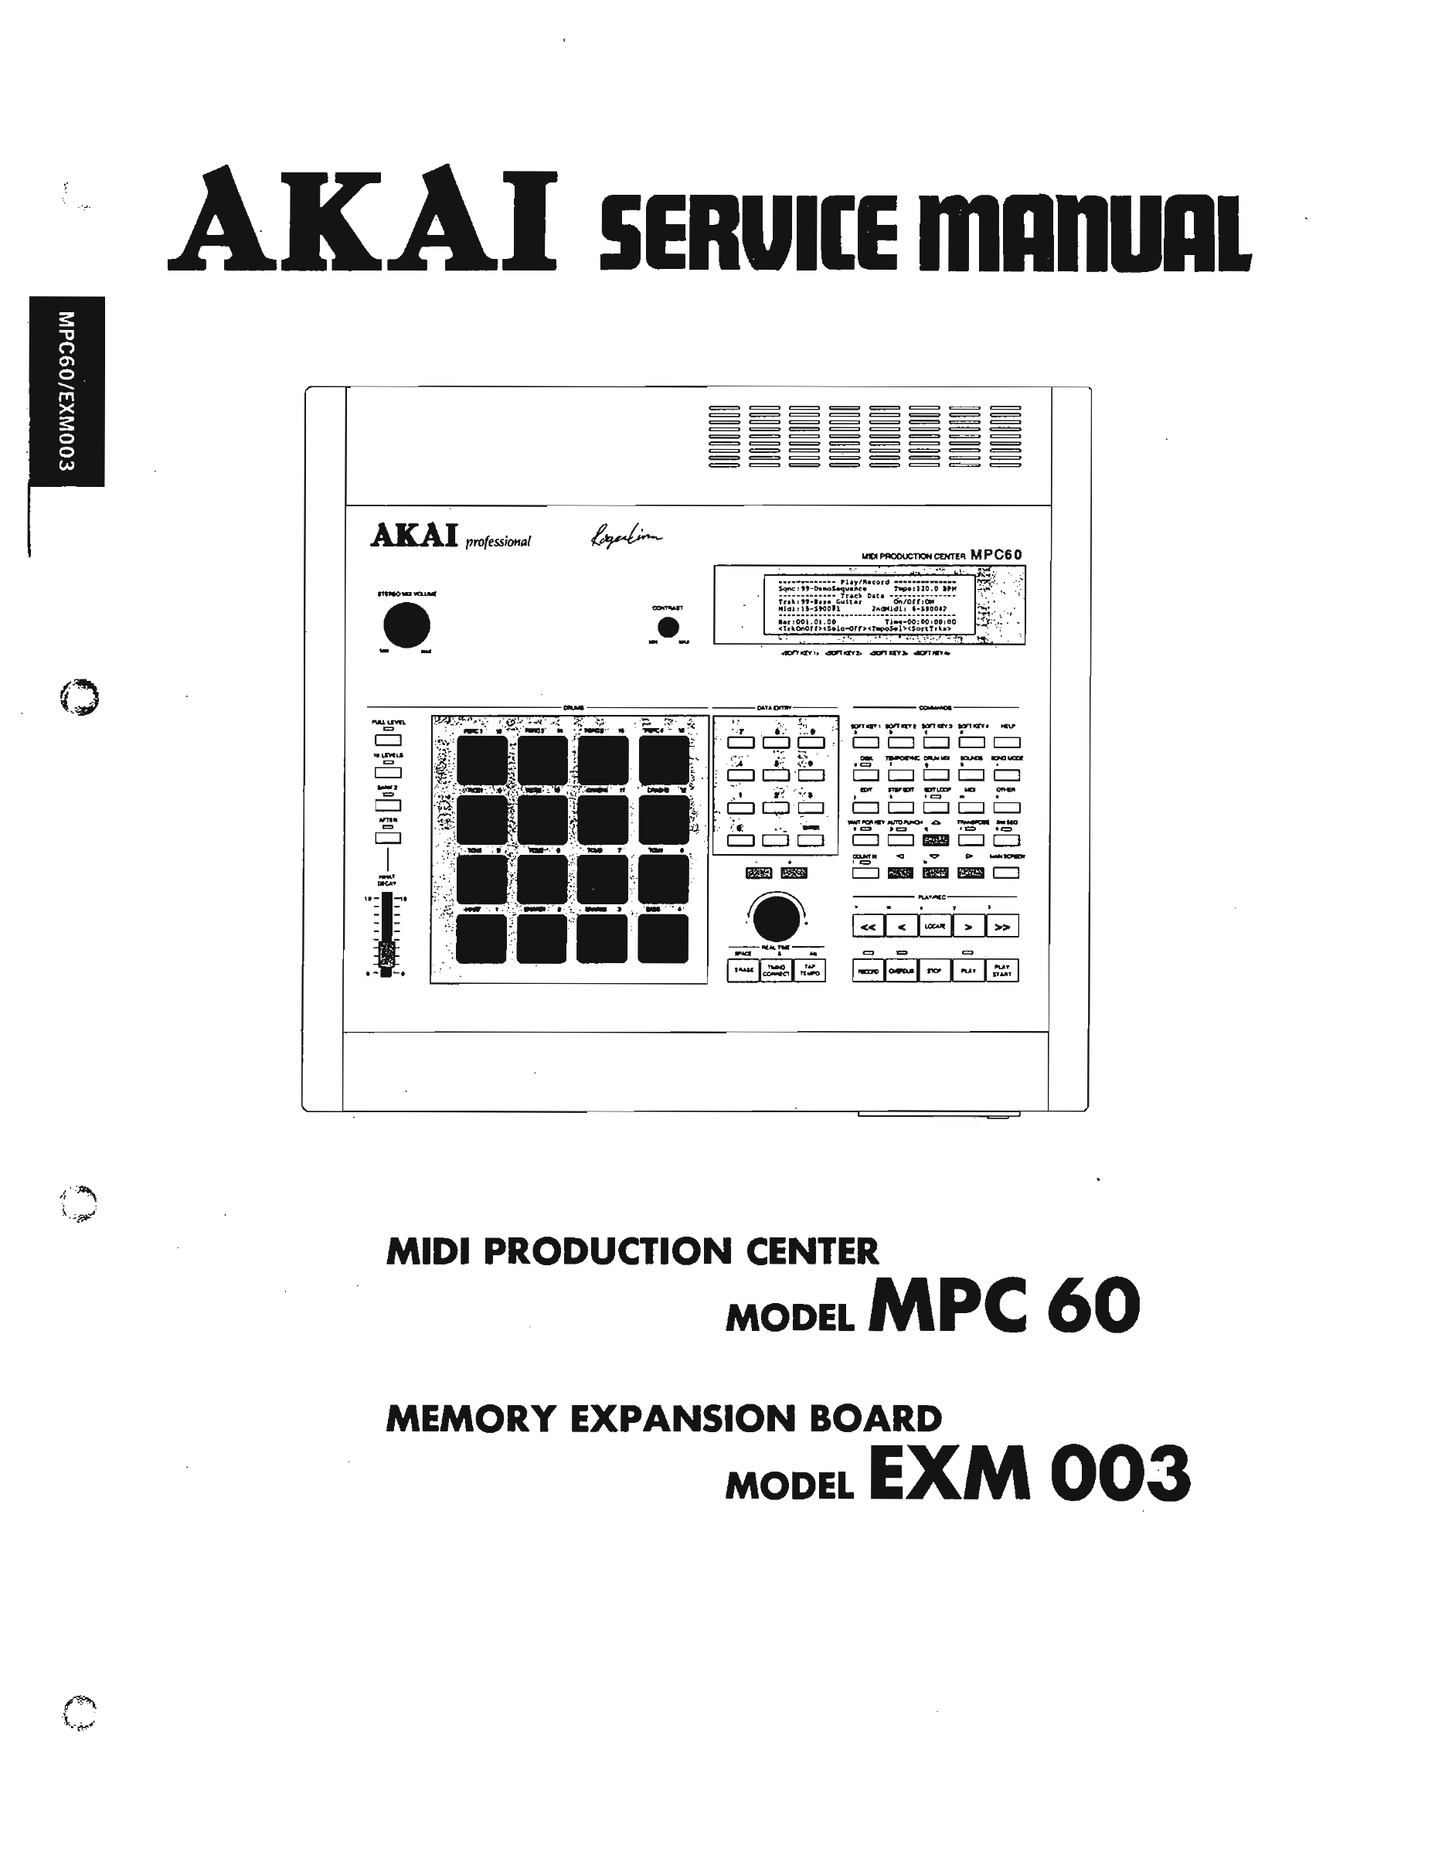 Akai MPC60 & EXM003 MIDI Production Center Service Manual (Pages: 65)